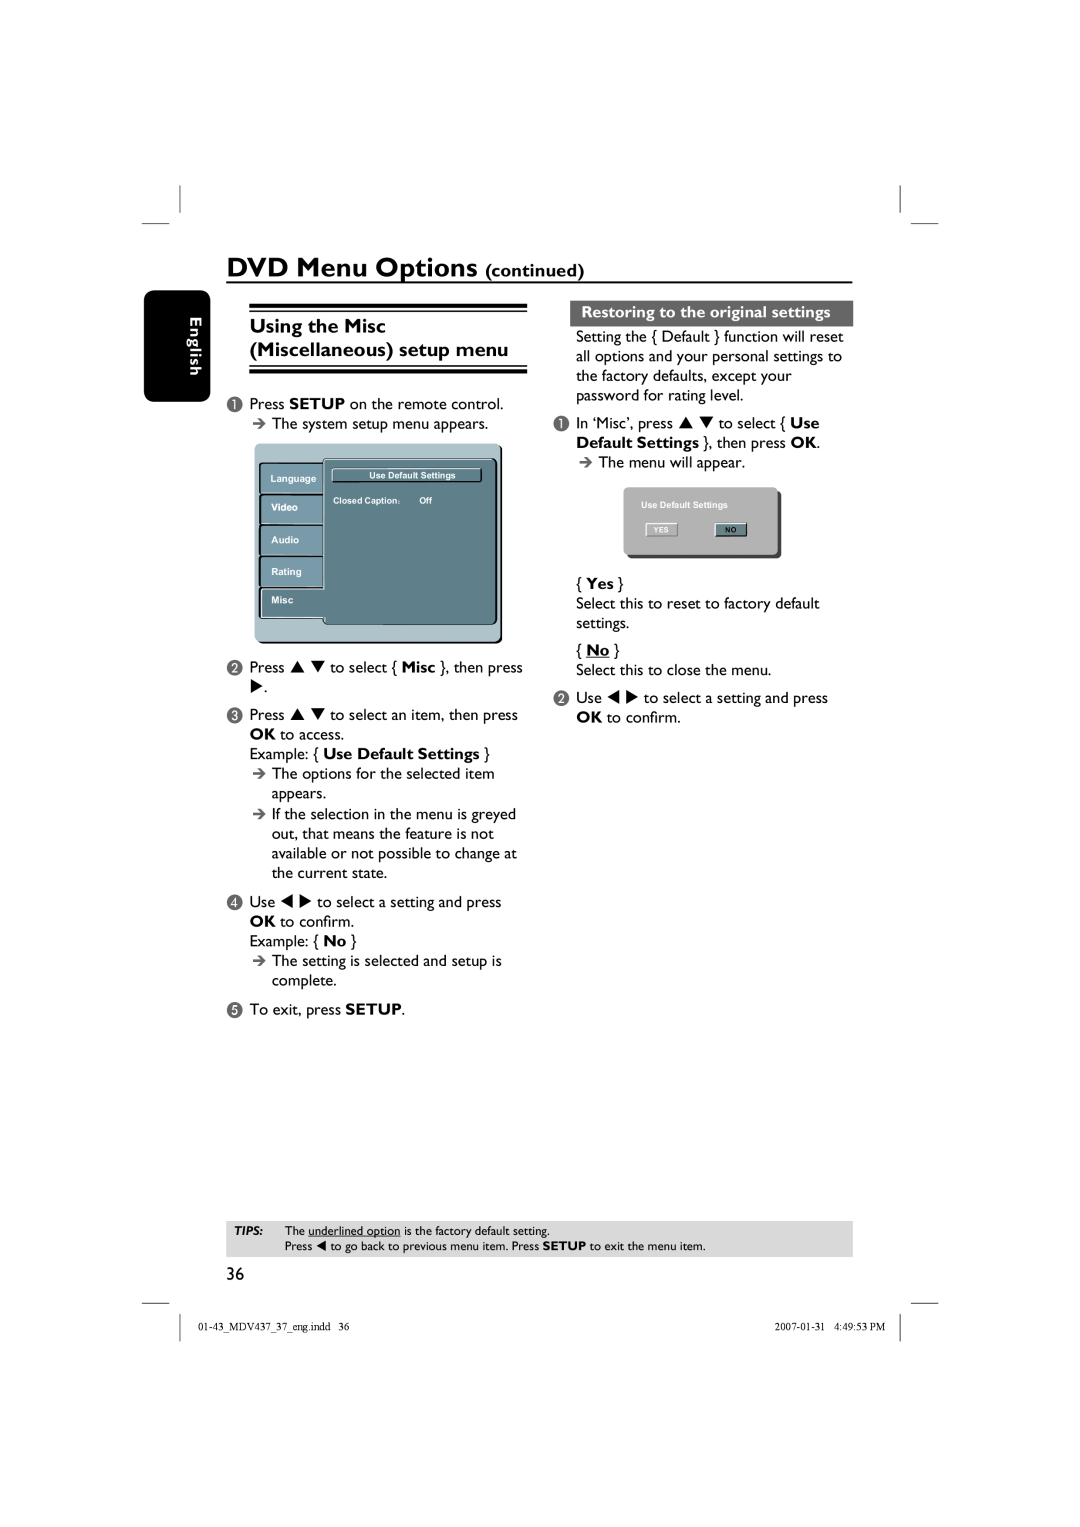 Magnavox MDV437 Using the Misc Miscellaneous setup menu, Example Use Default Settings, Restoring to the original settings 